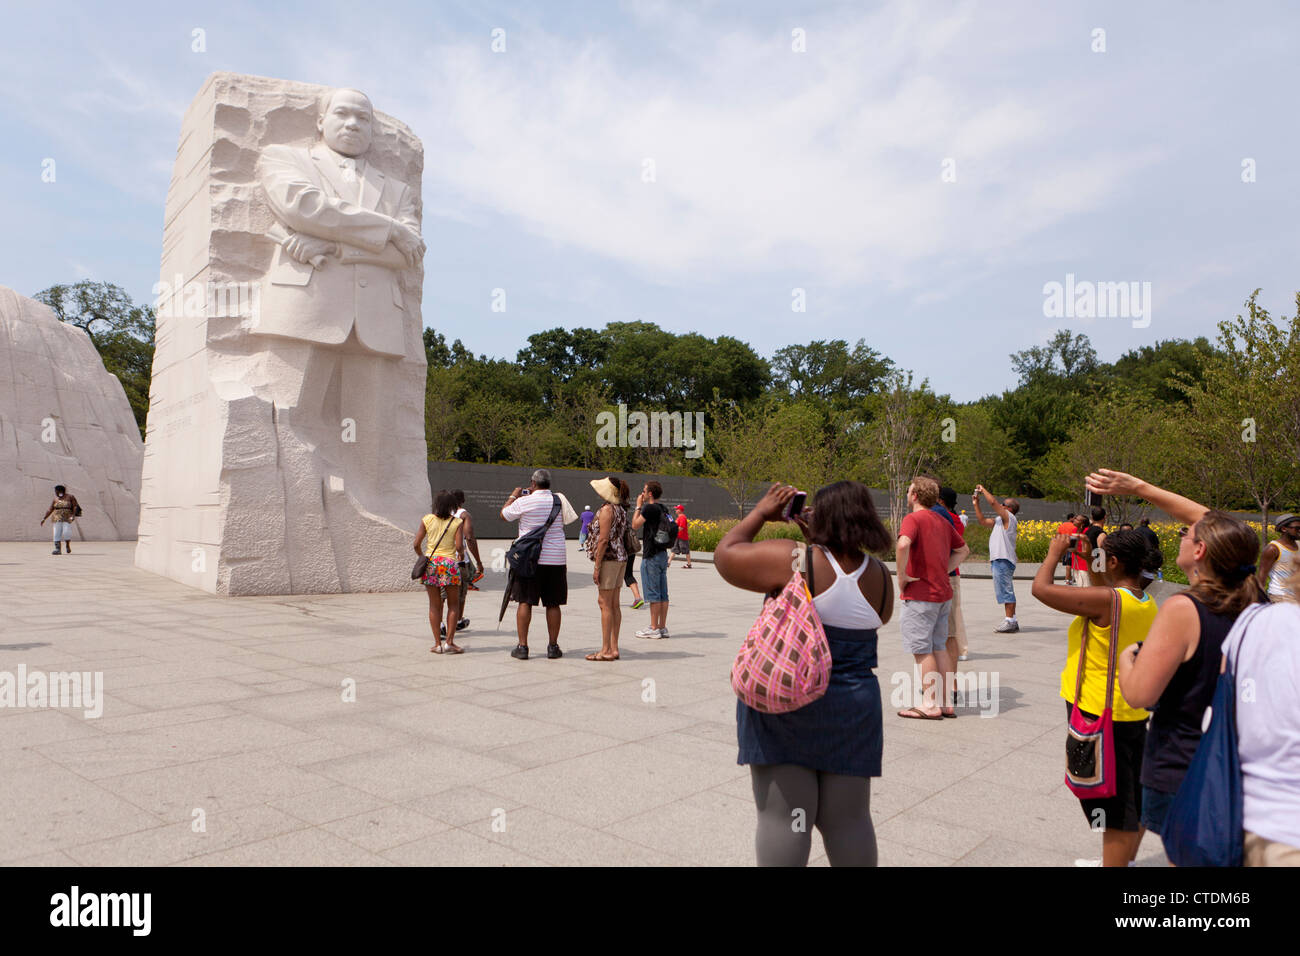 Martin Luther King Memorial - Washington, DC USA Banque D'Images